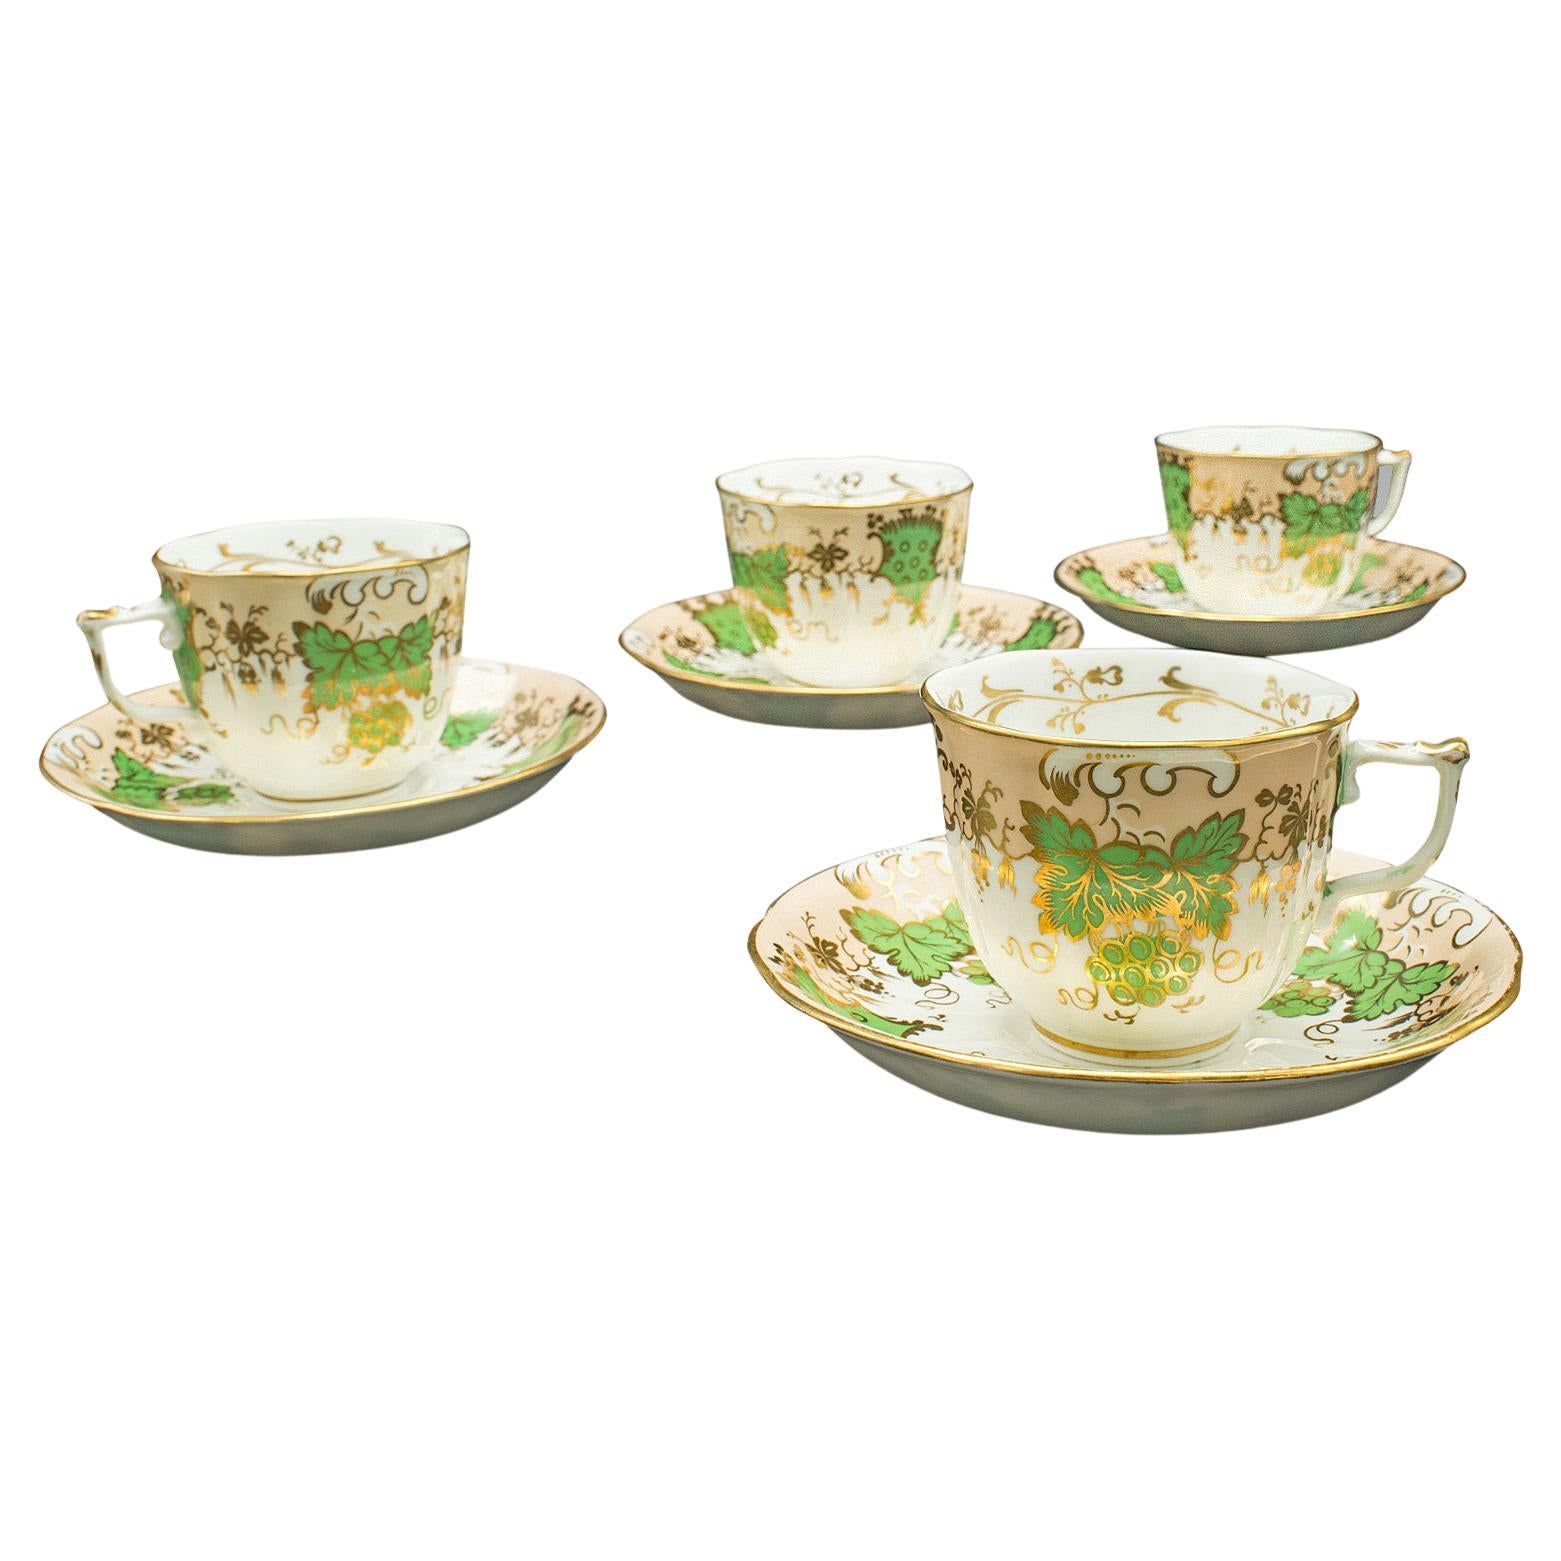 Set Of 4 Antique Tea Cups, English, Ceramic, Decorative, Cup, Saucer, Victorian For Sale